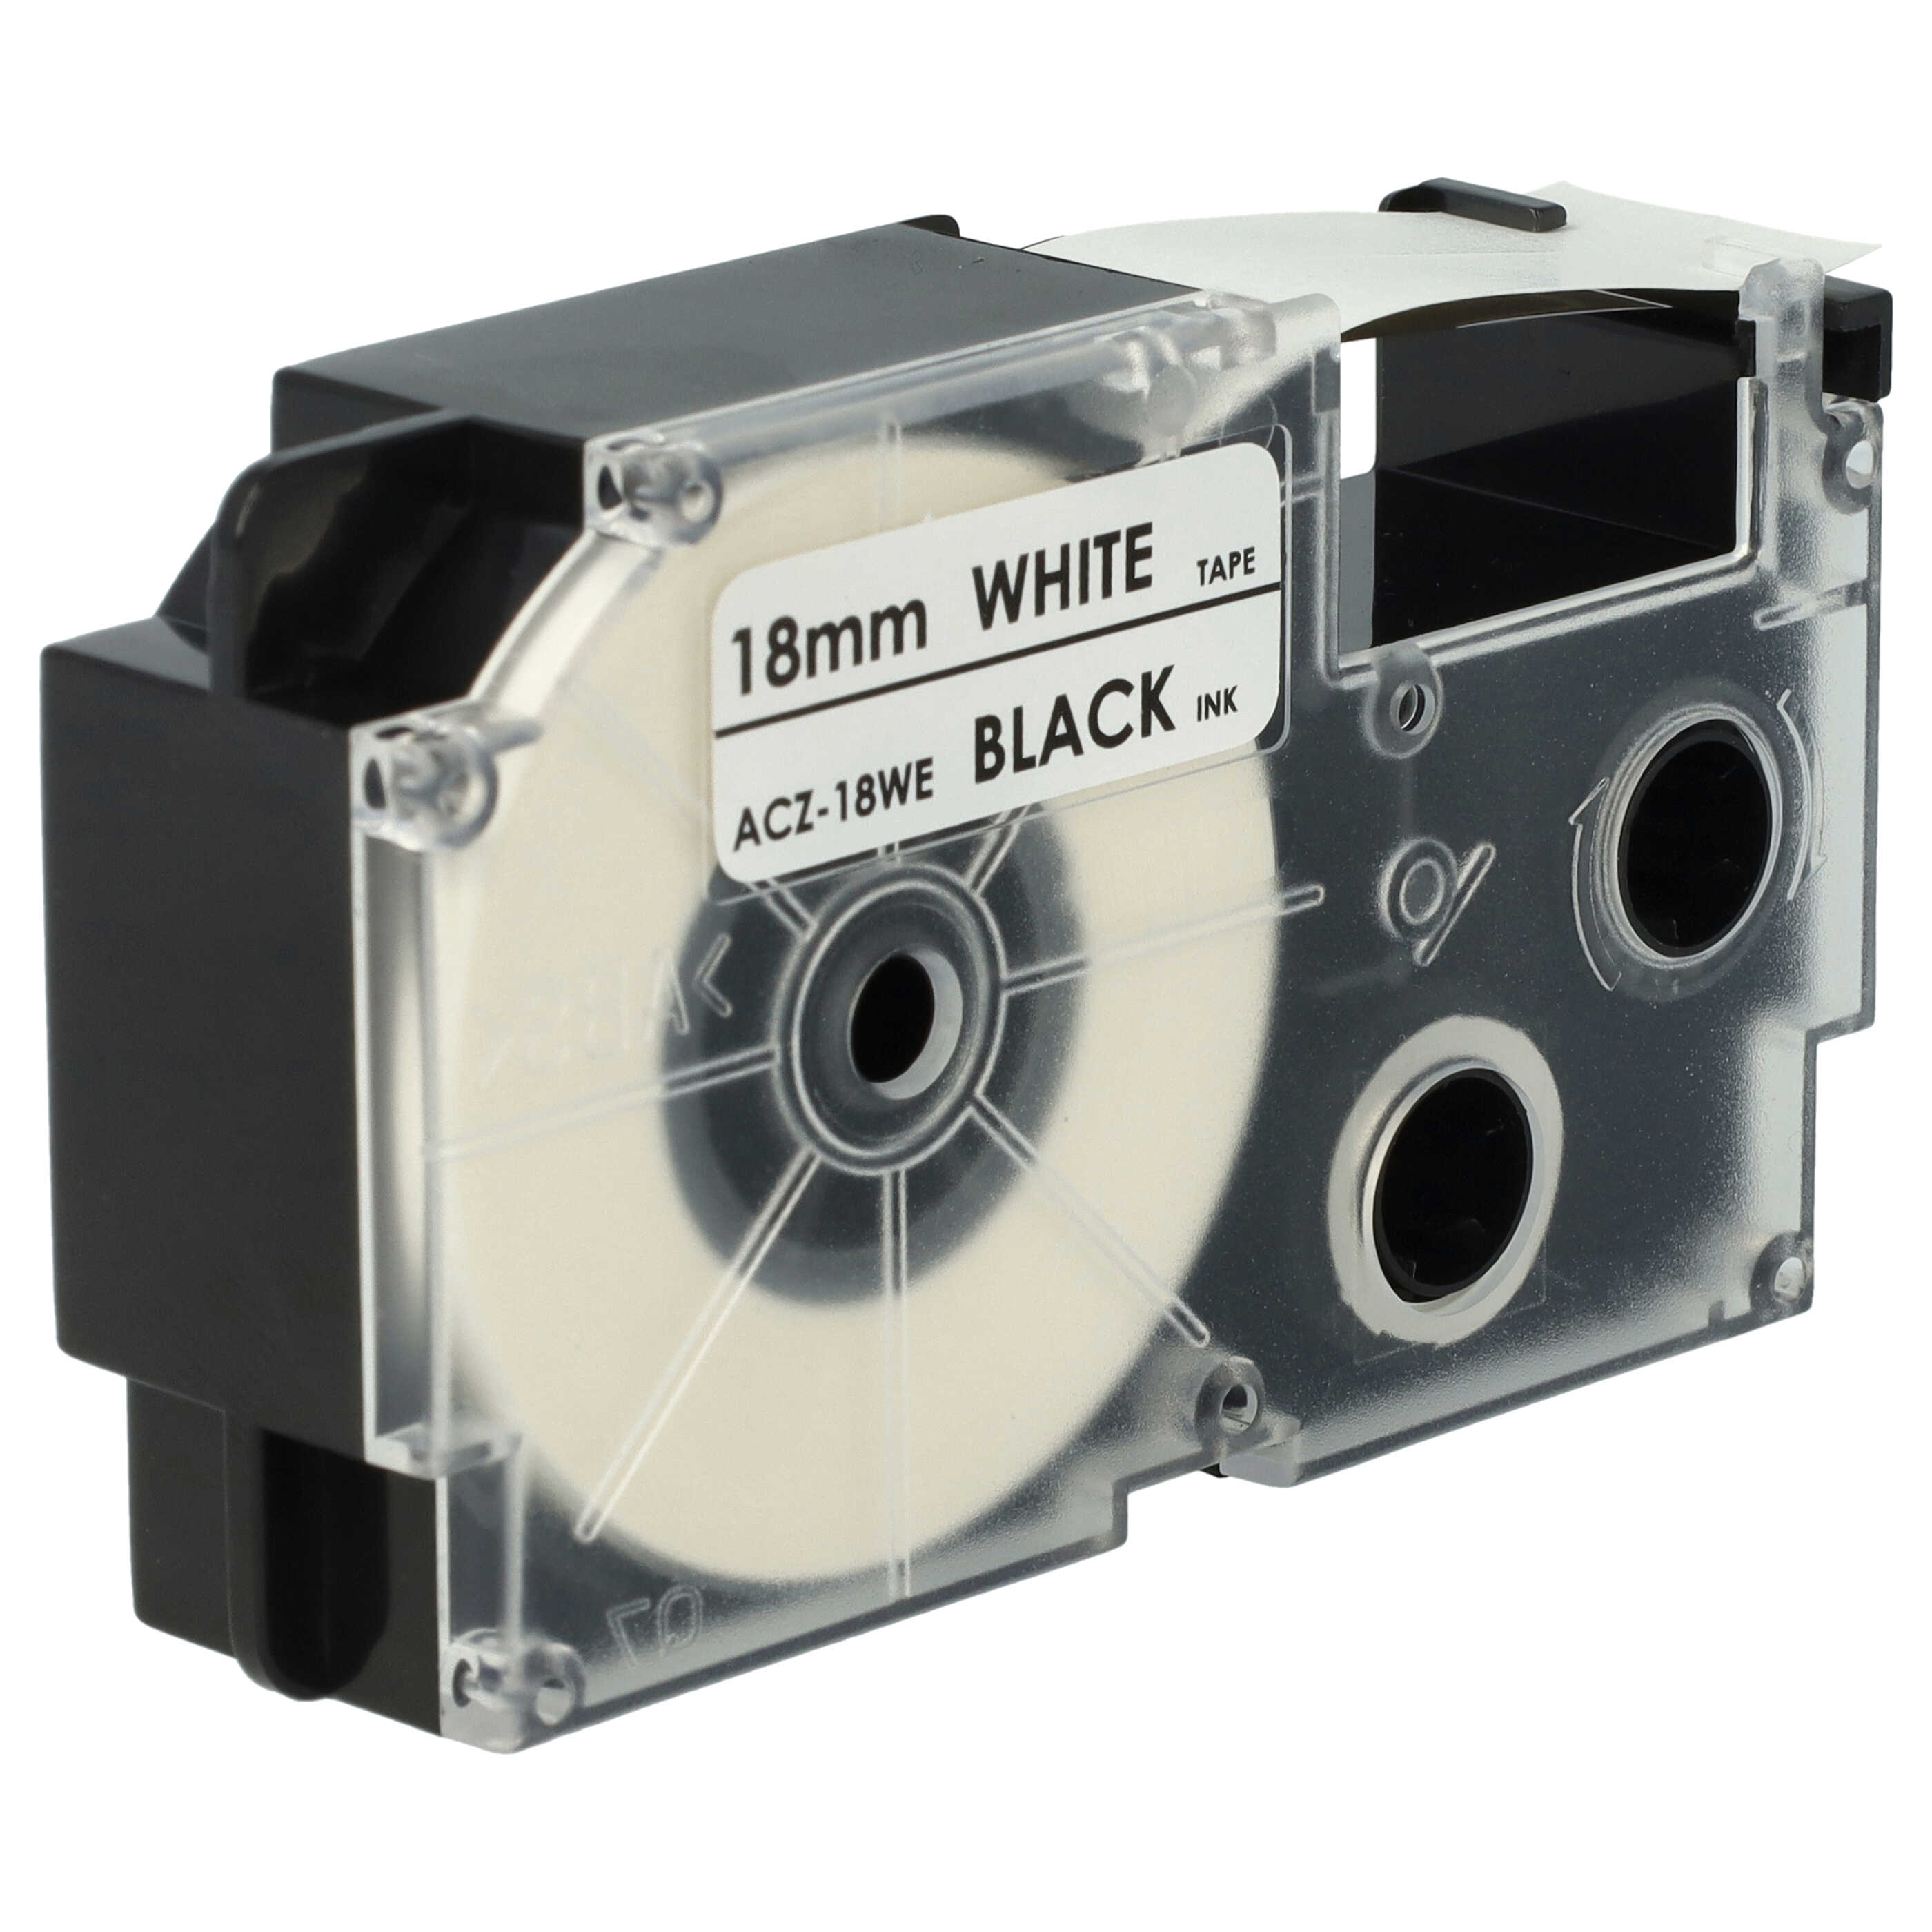 Cassetta nastro sostituisce Casio XR-18WE, XR-18WE1 per etichettatrice Casio 18mm nero su bianco, pet+ RESIN